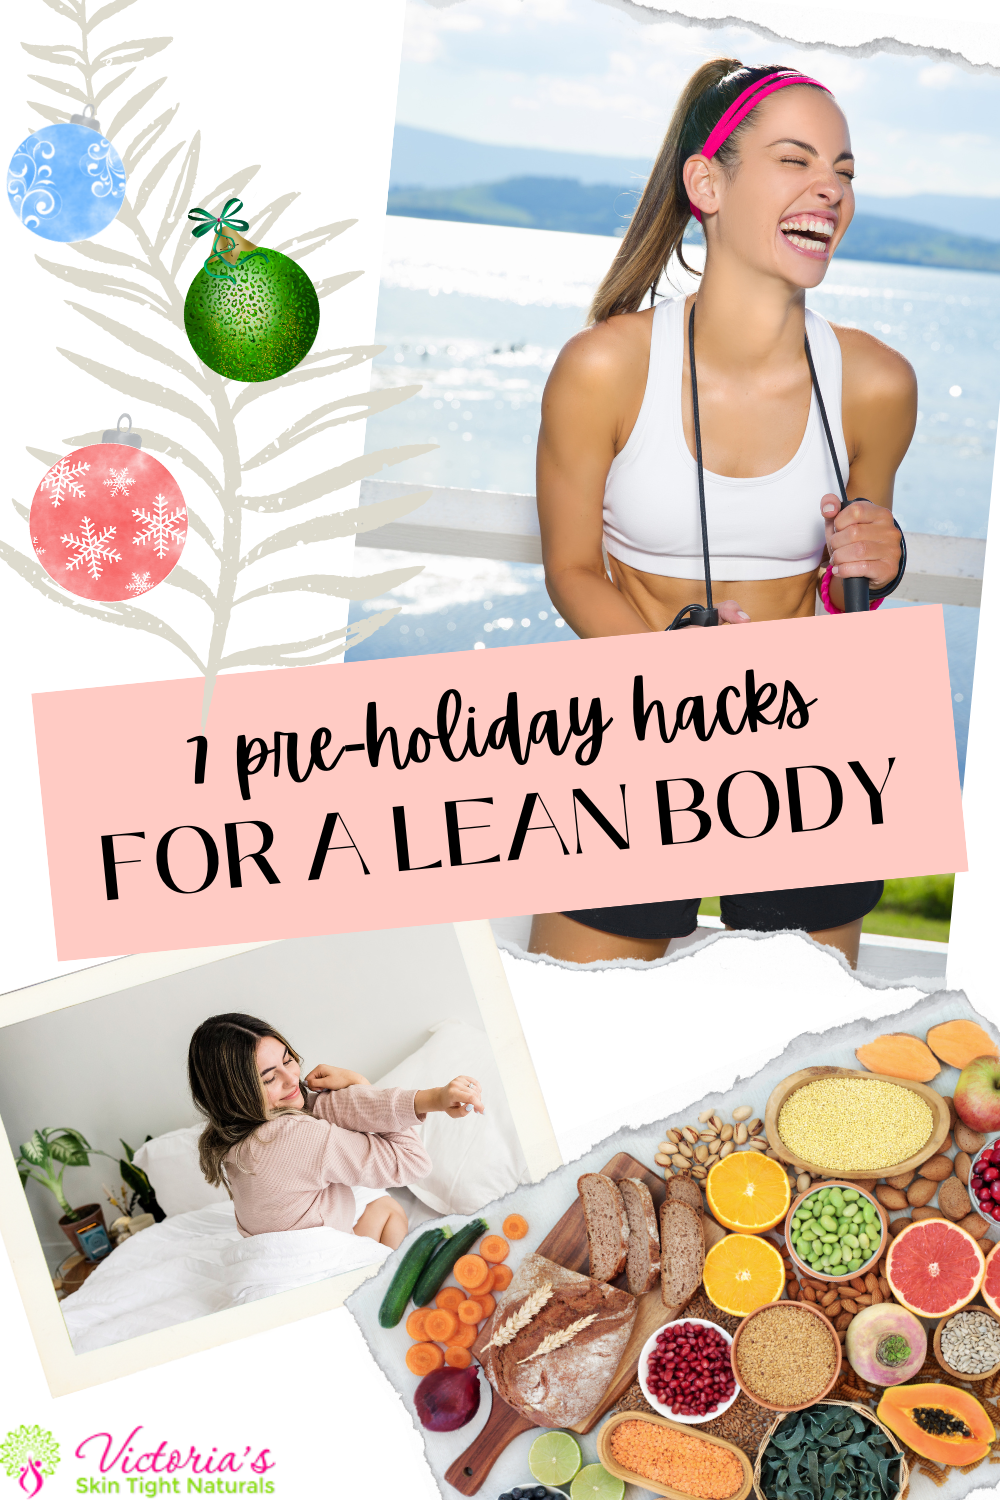 7 Pre-Holiday Lean Body Hacks